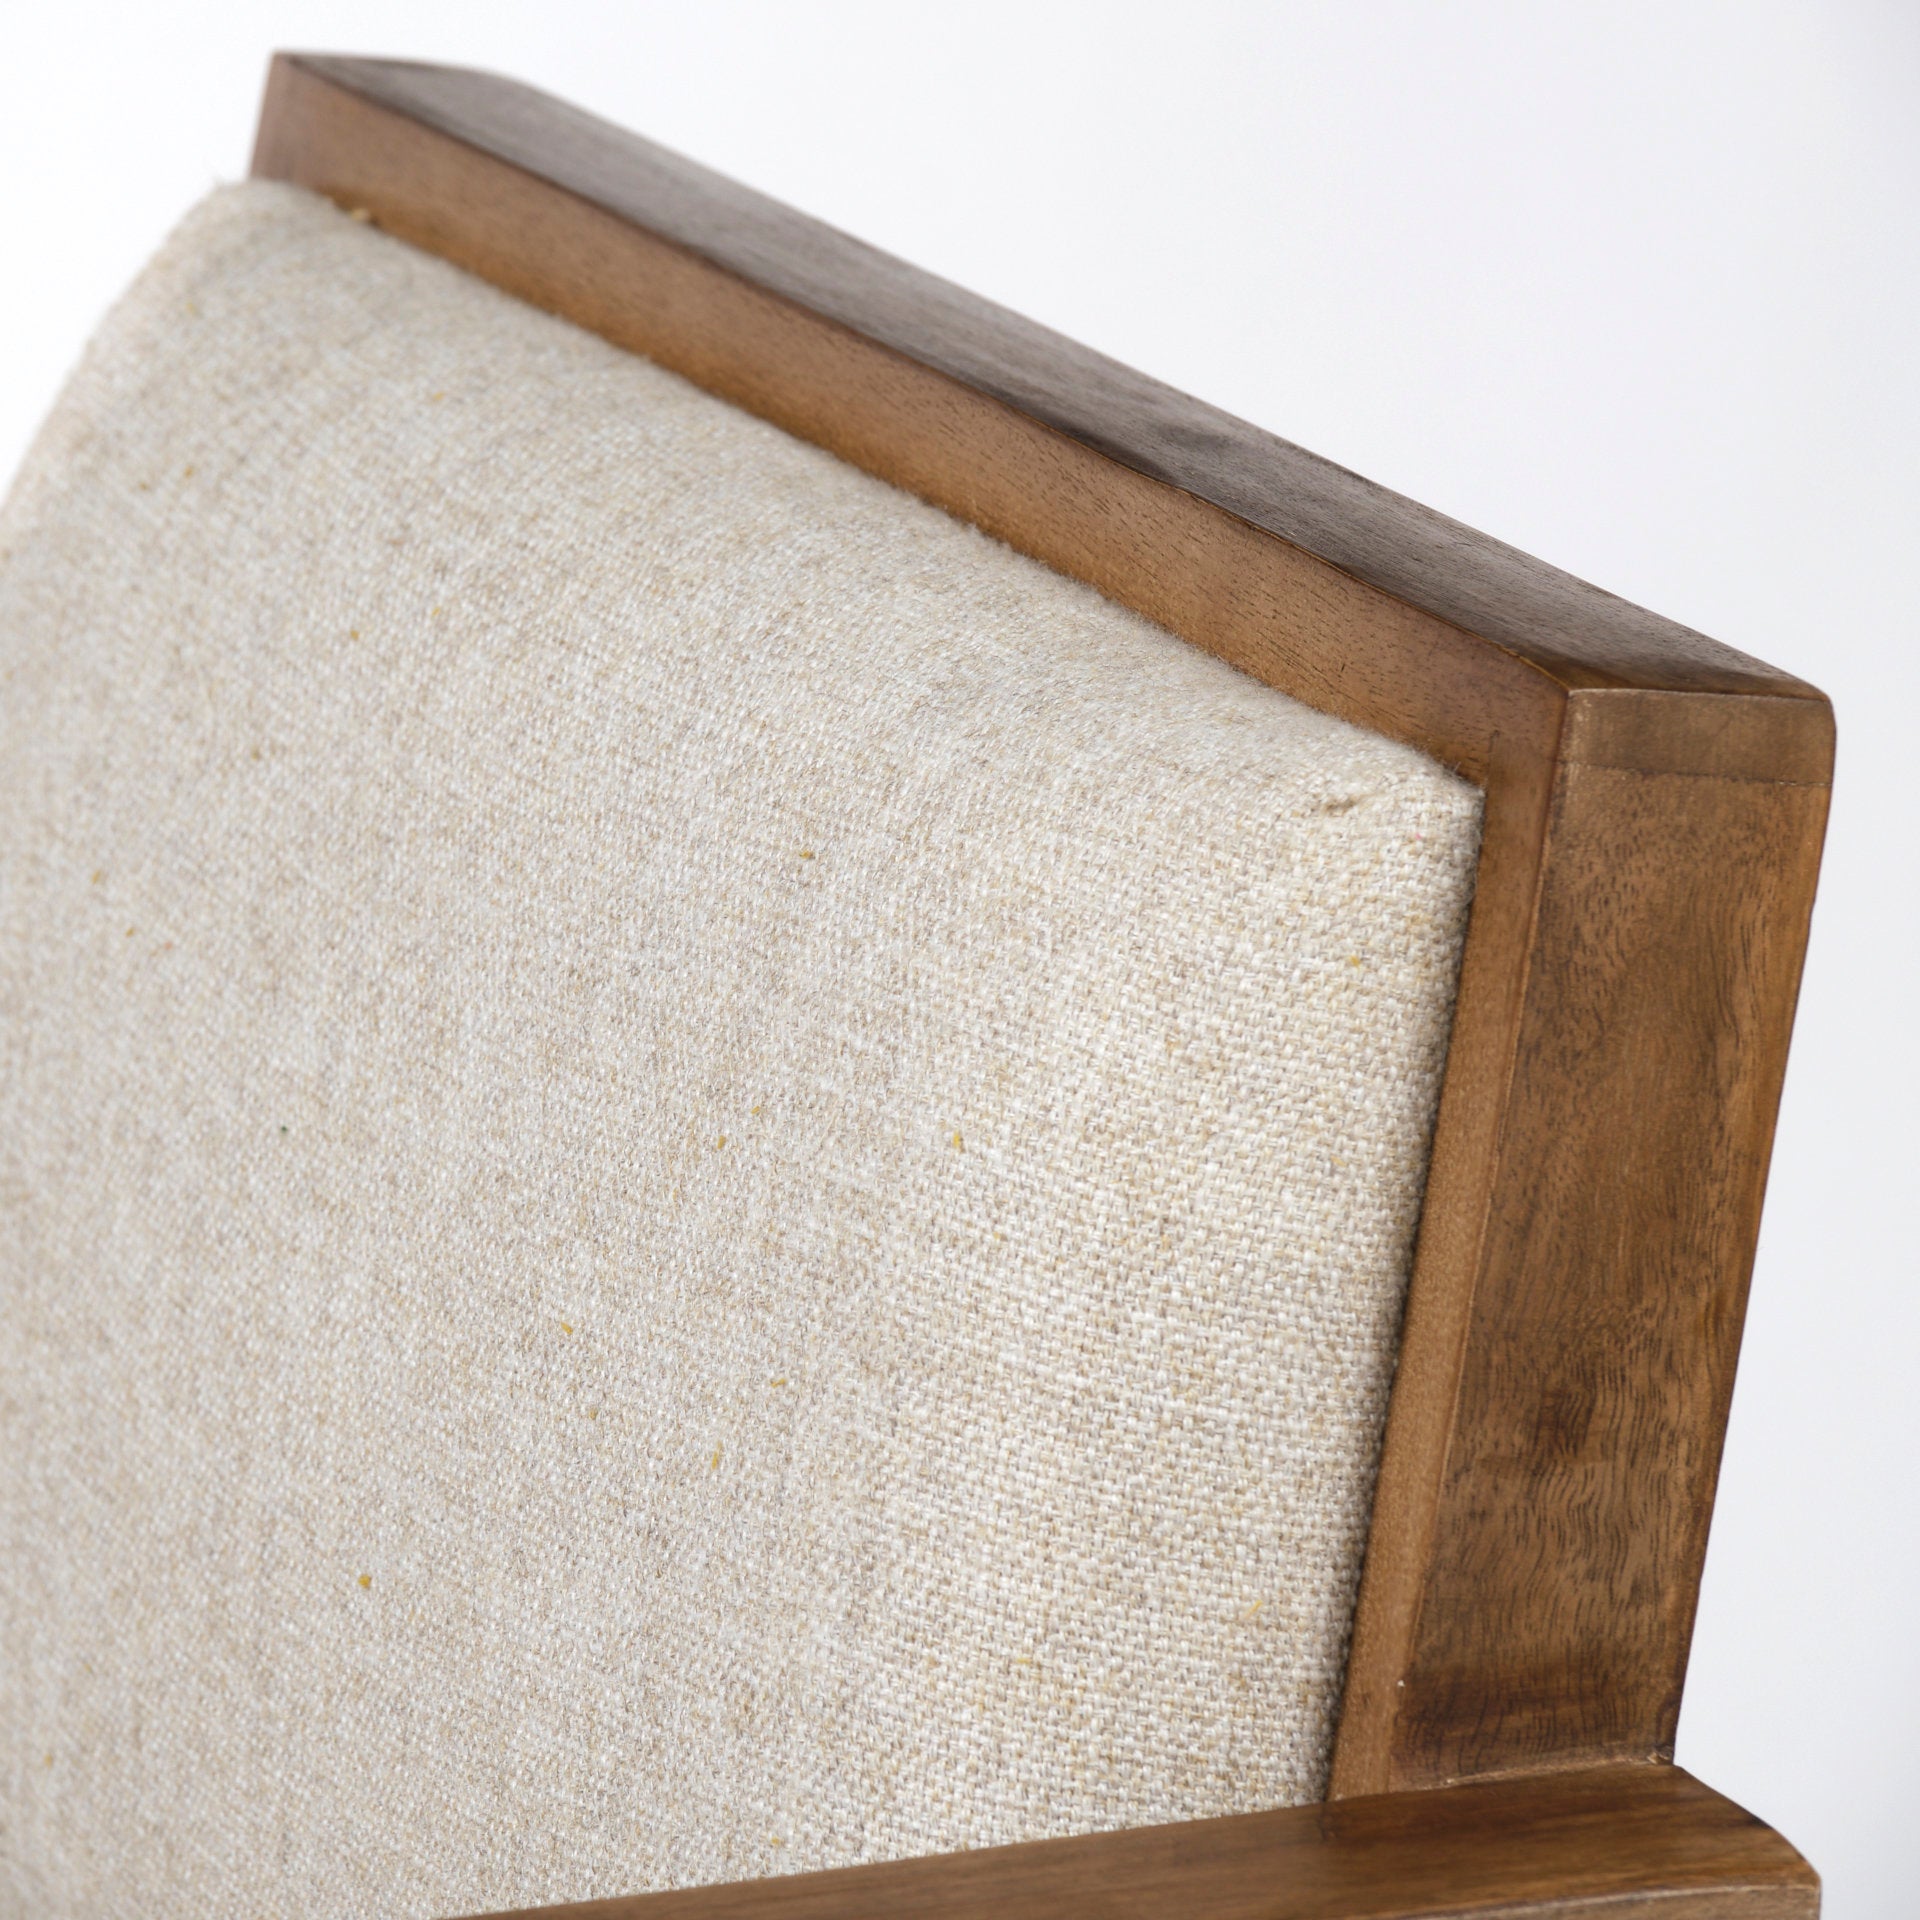 Topanga Dining Chair - Medium Brown Wood